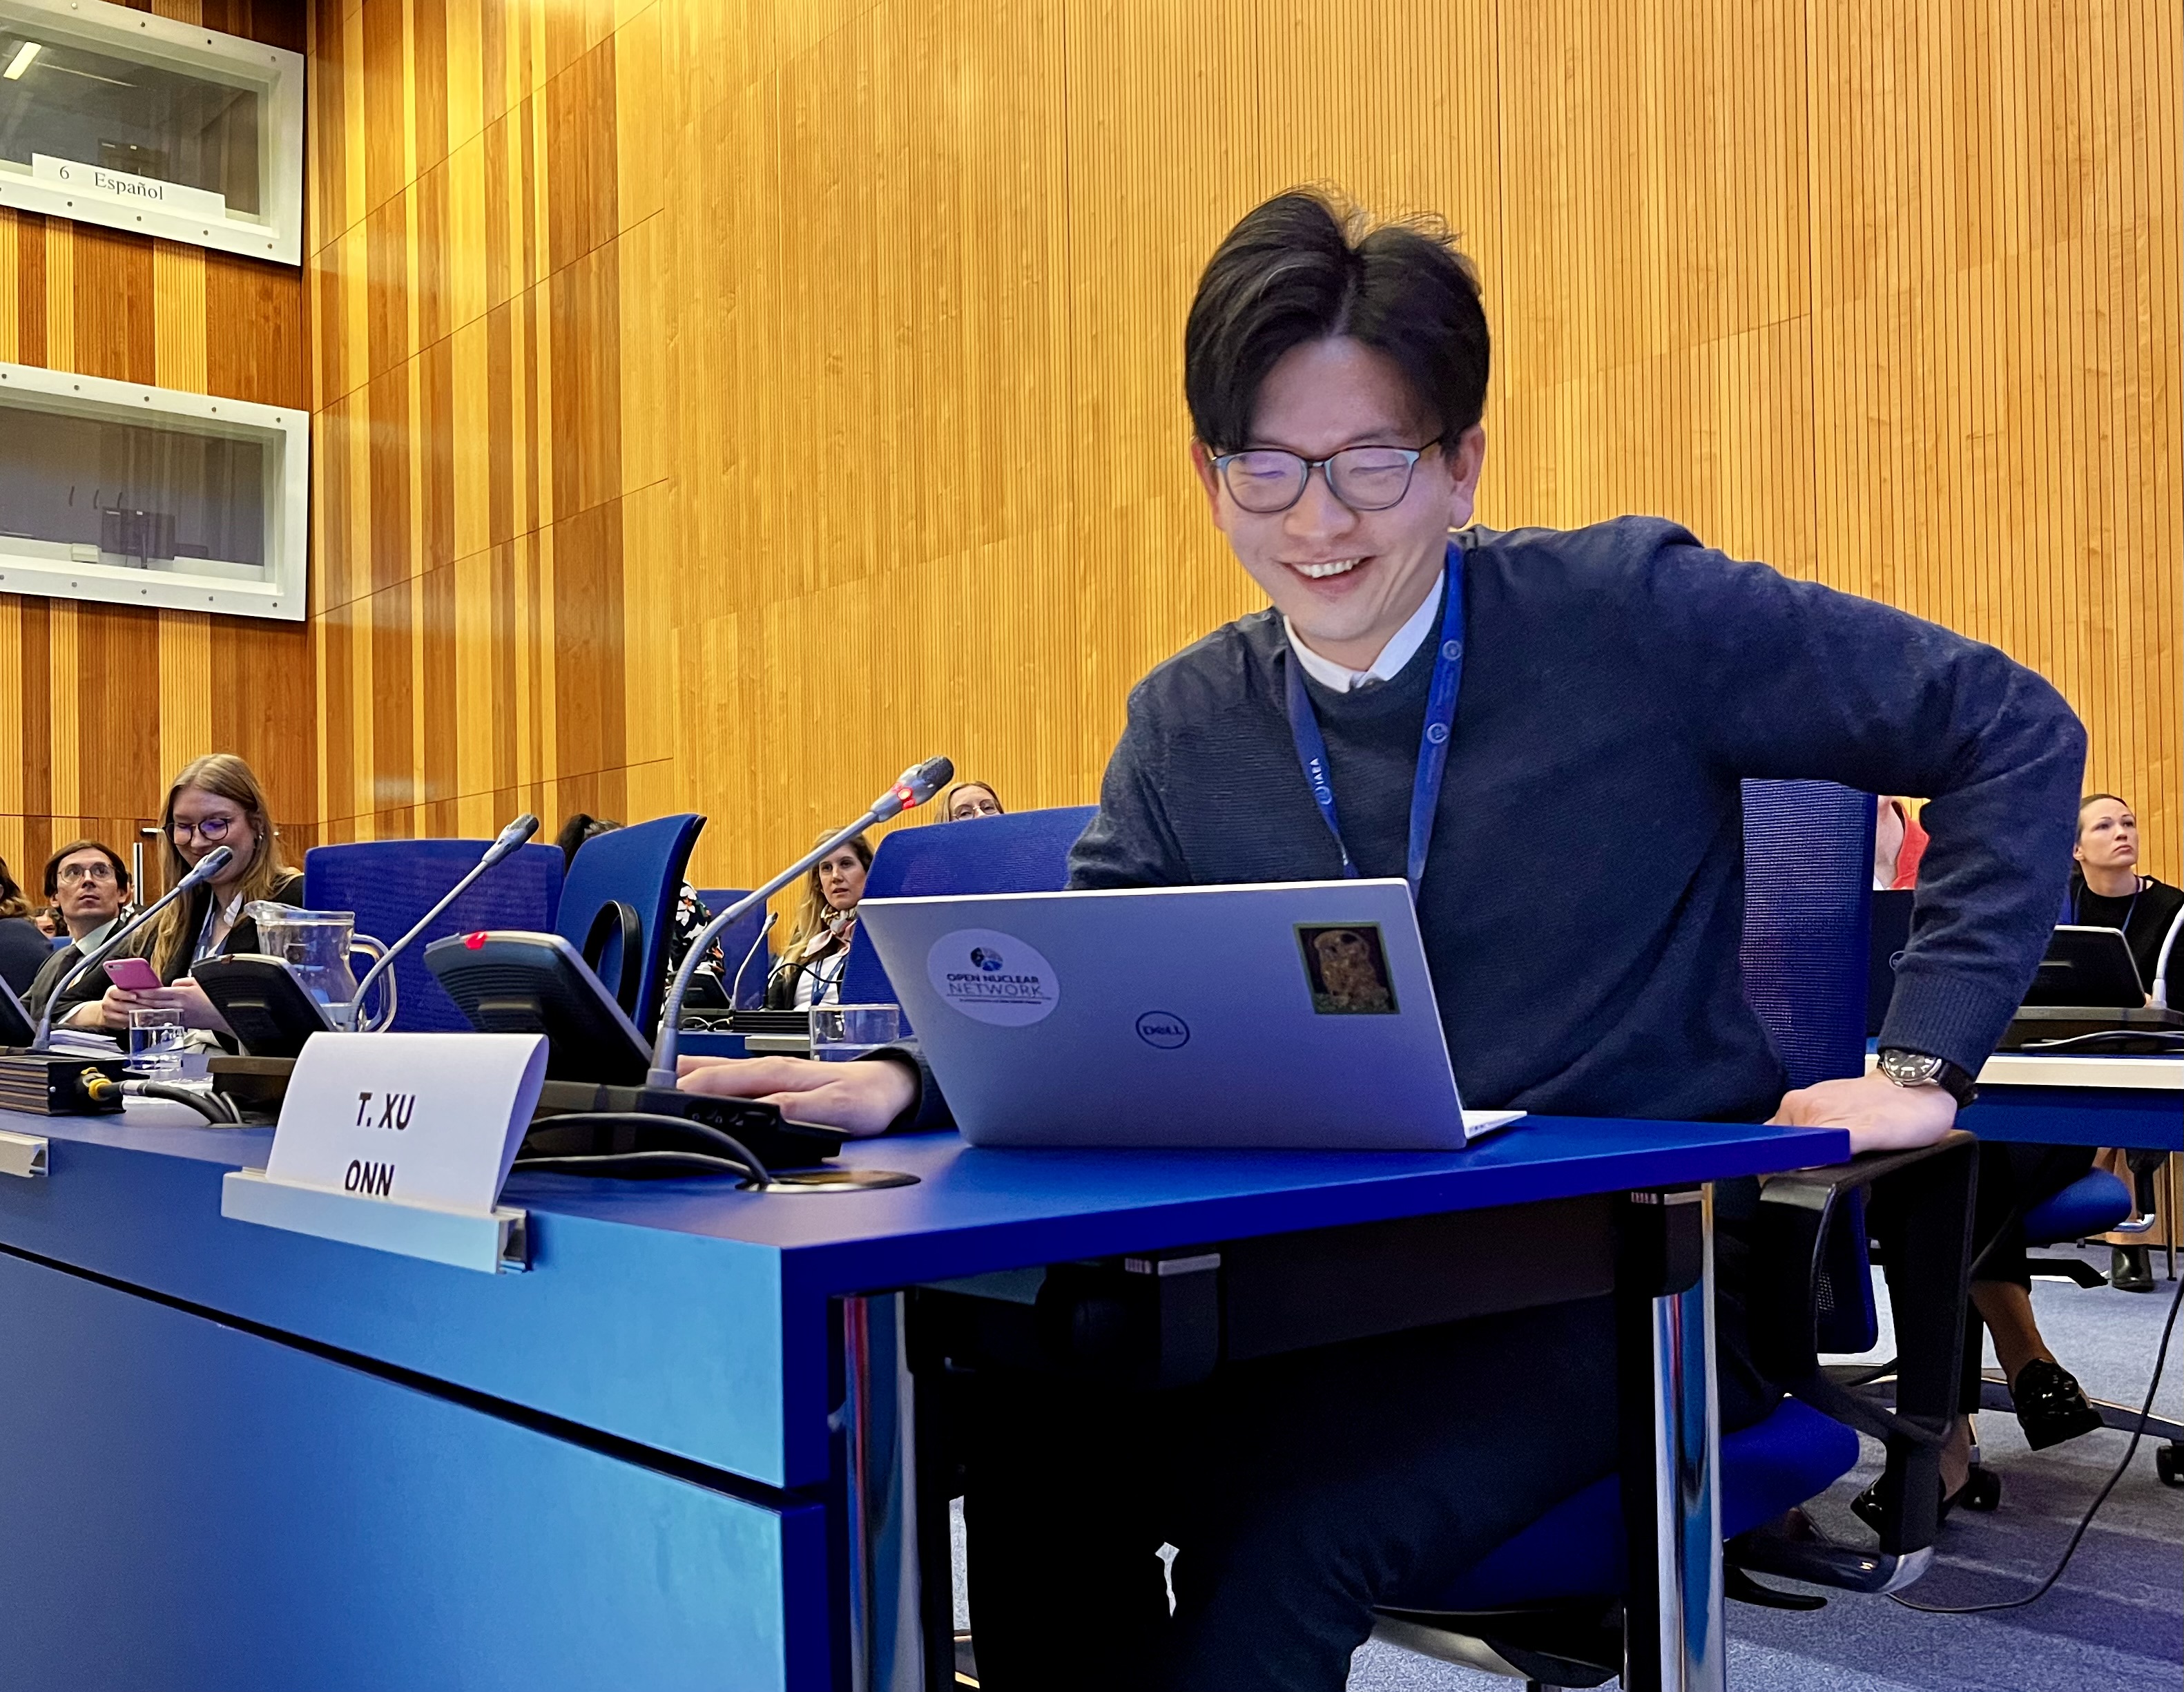 Tianran Xu delivers a presentation at the IAEA Symposium on International Safeguards.